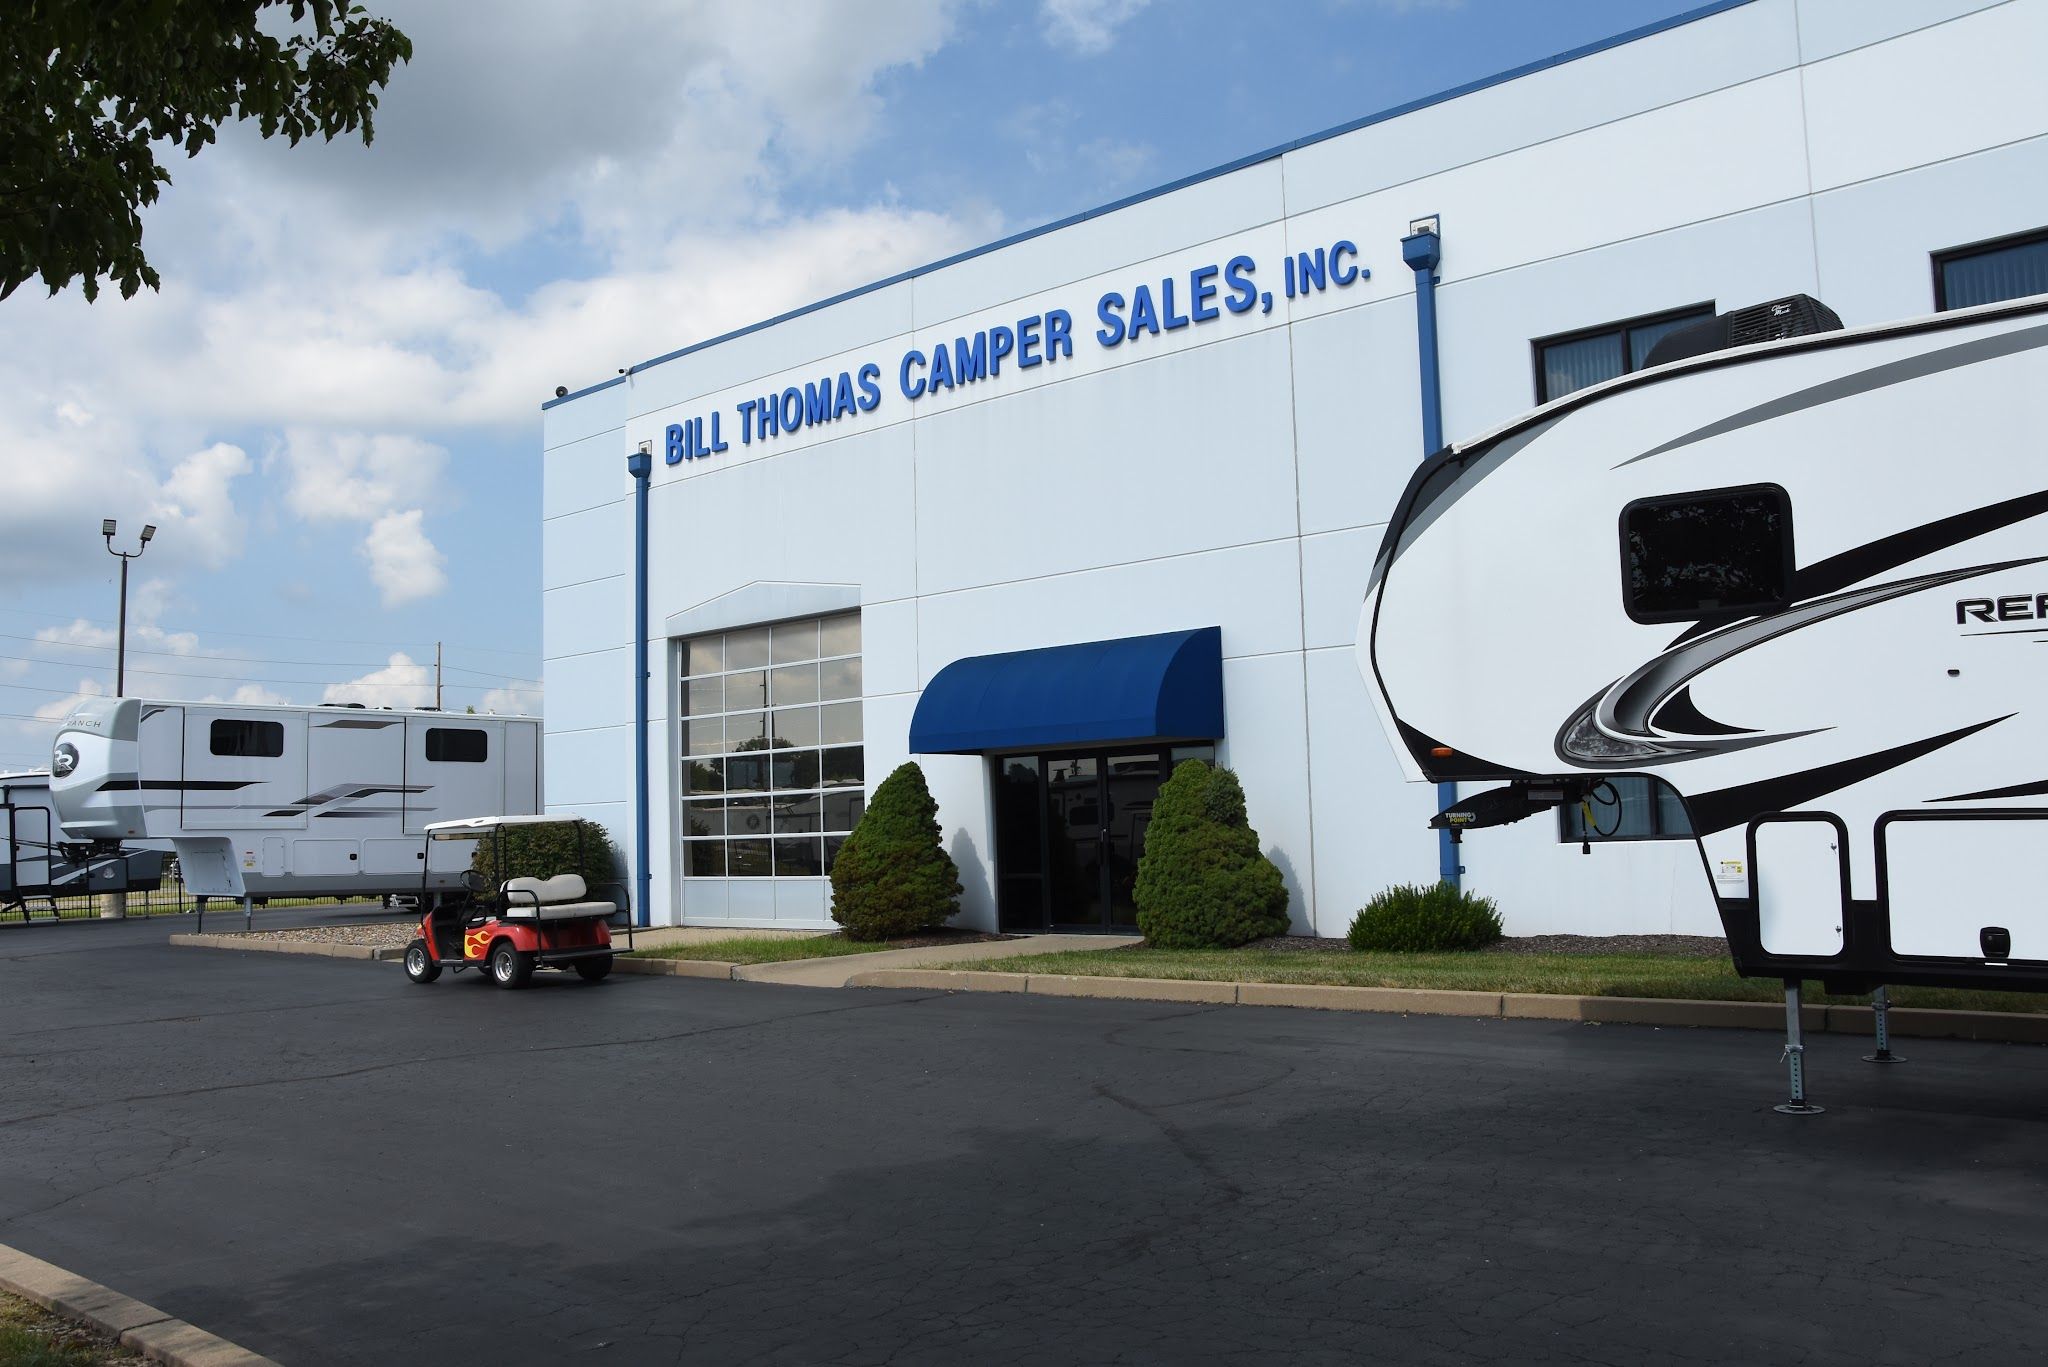 Bill Thomas Camper Sales